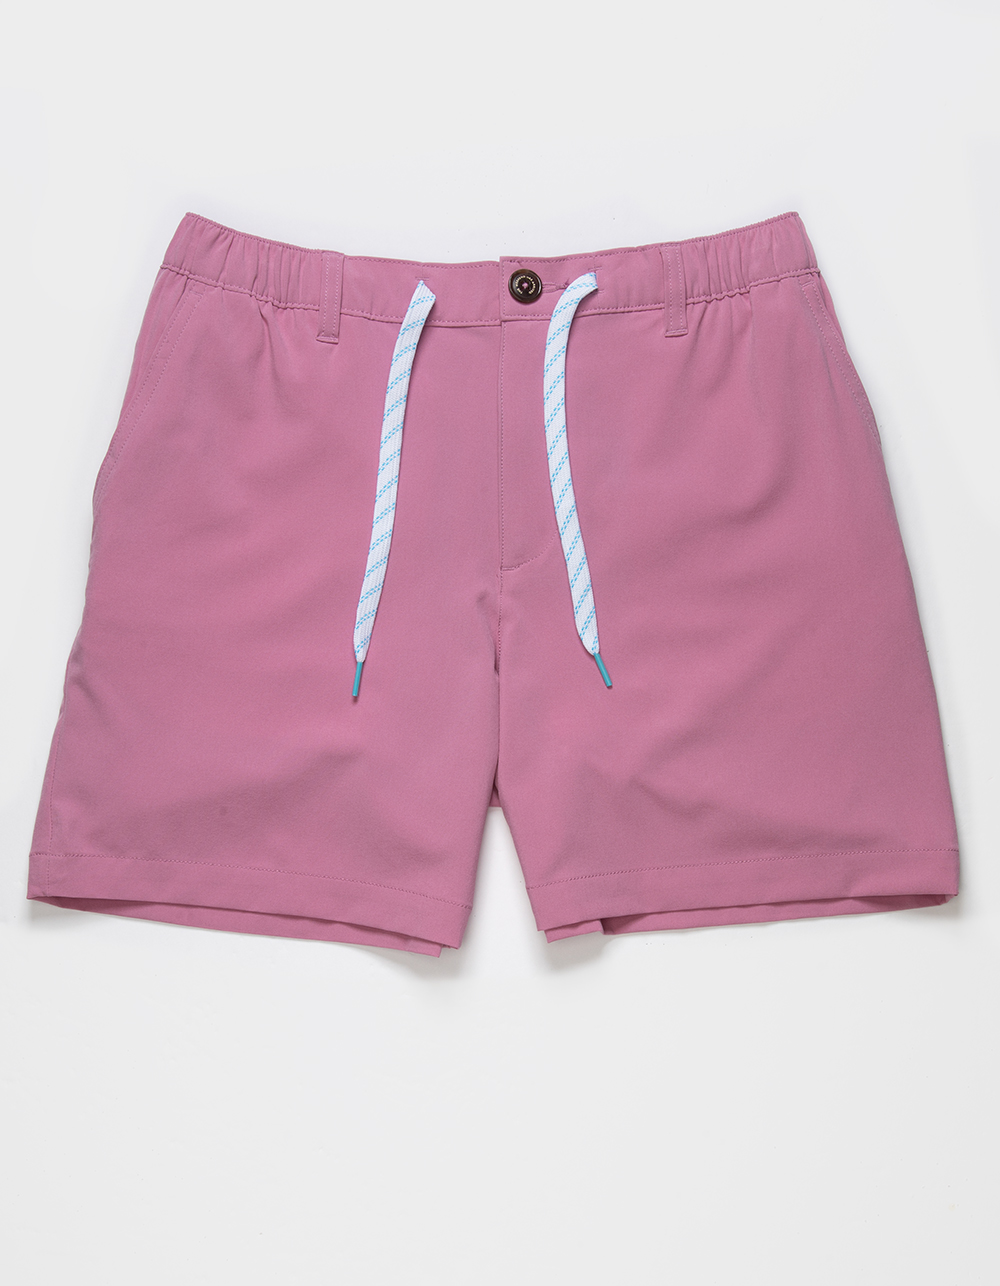 Chubbies Everywear Performance 6'' Shorts - Light Pink - X-Large